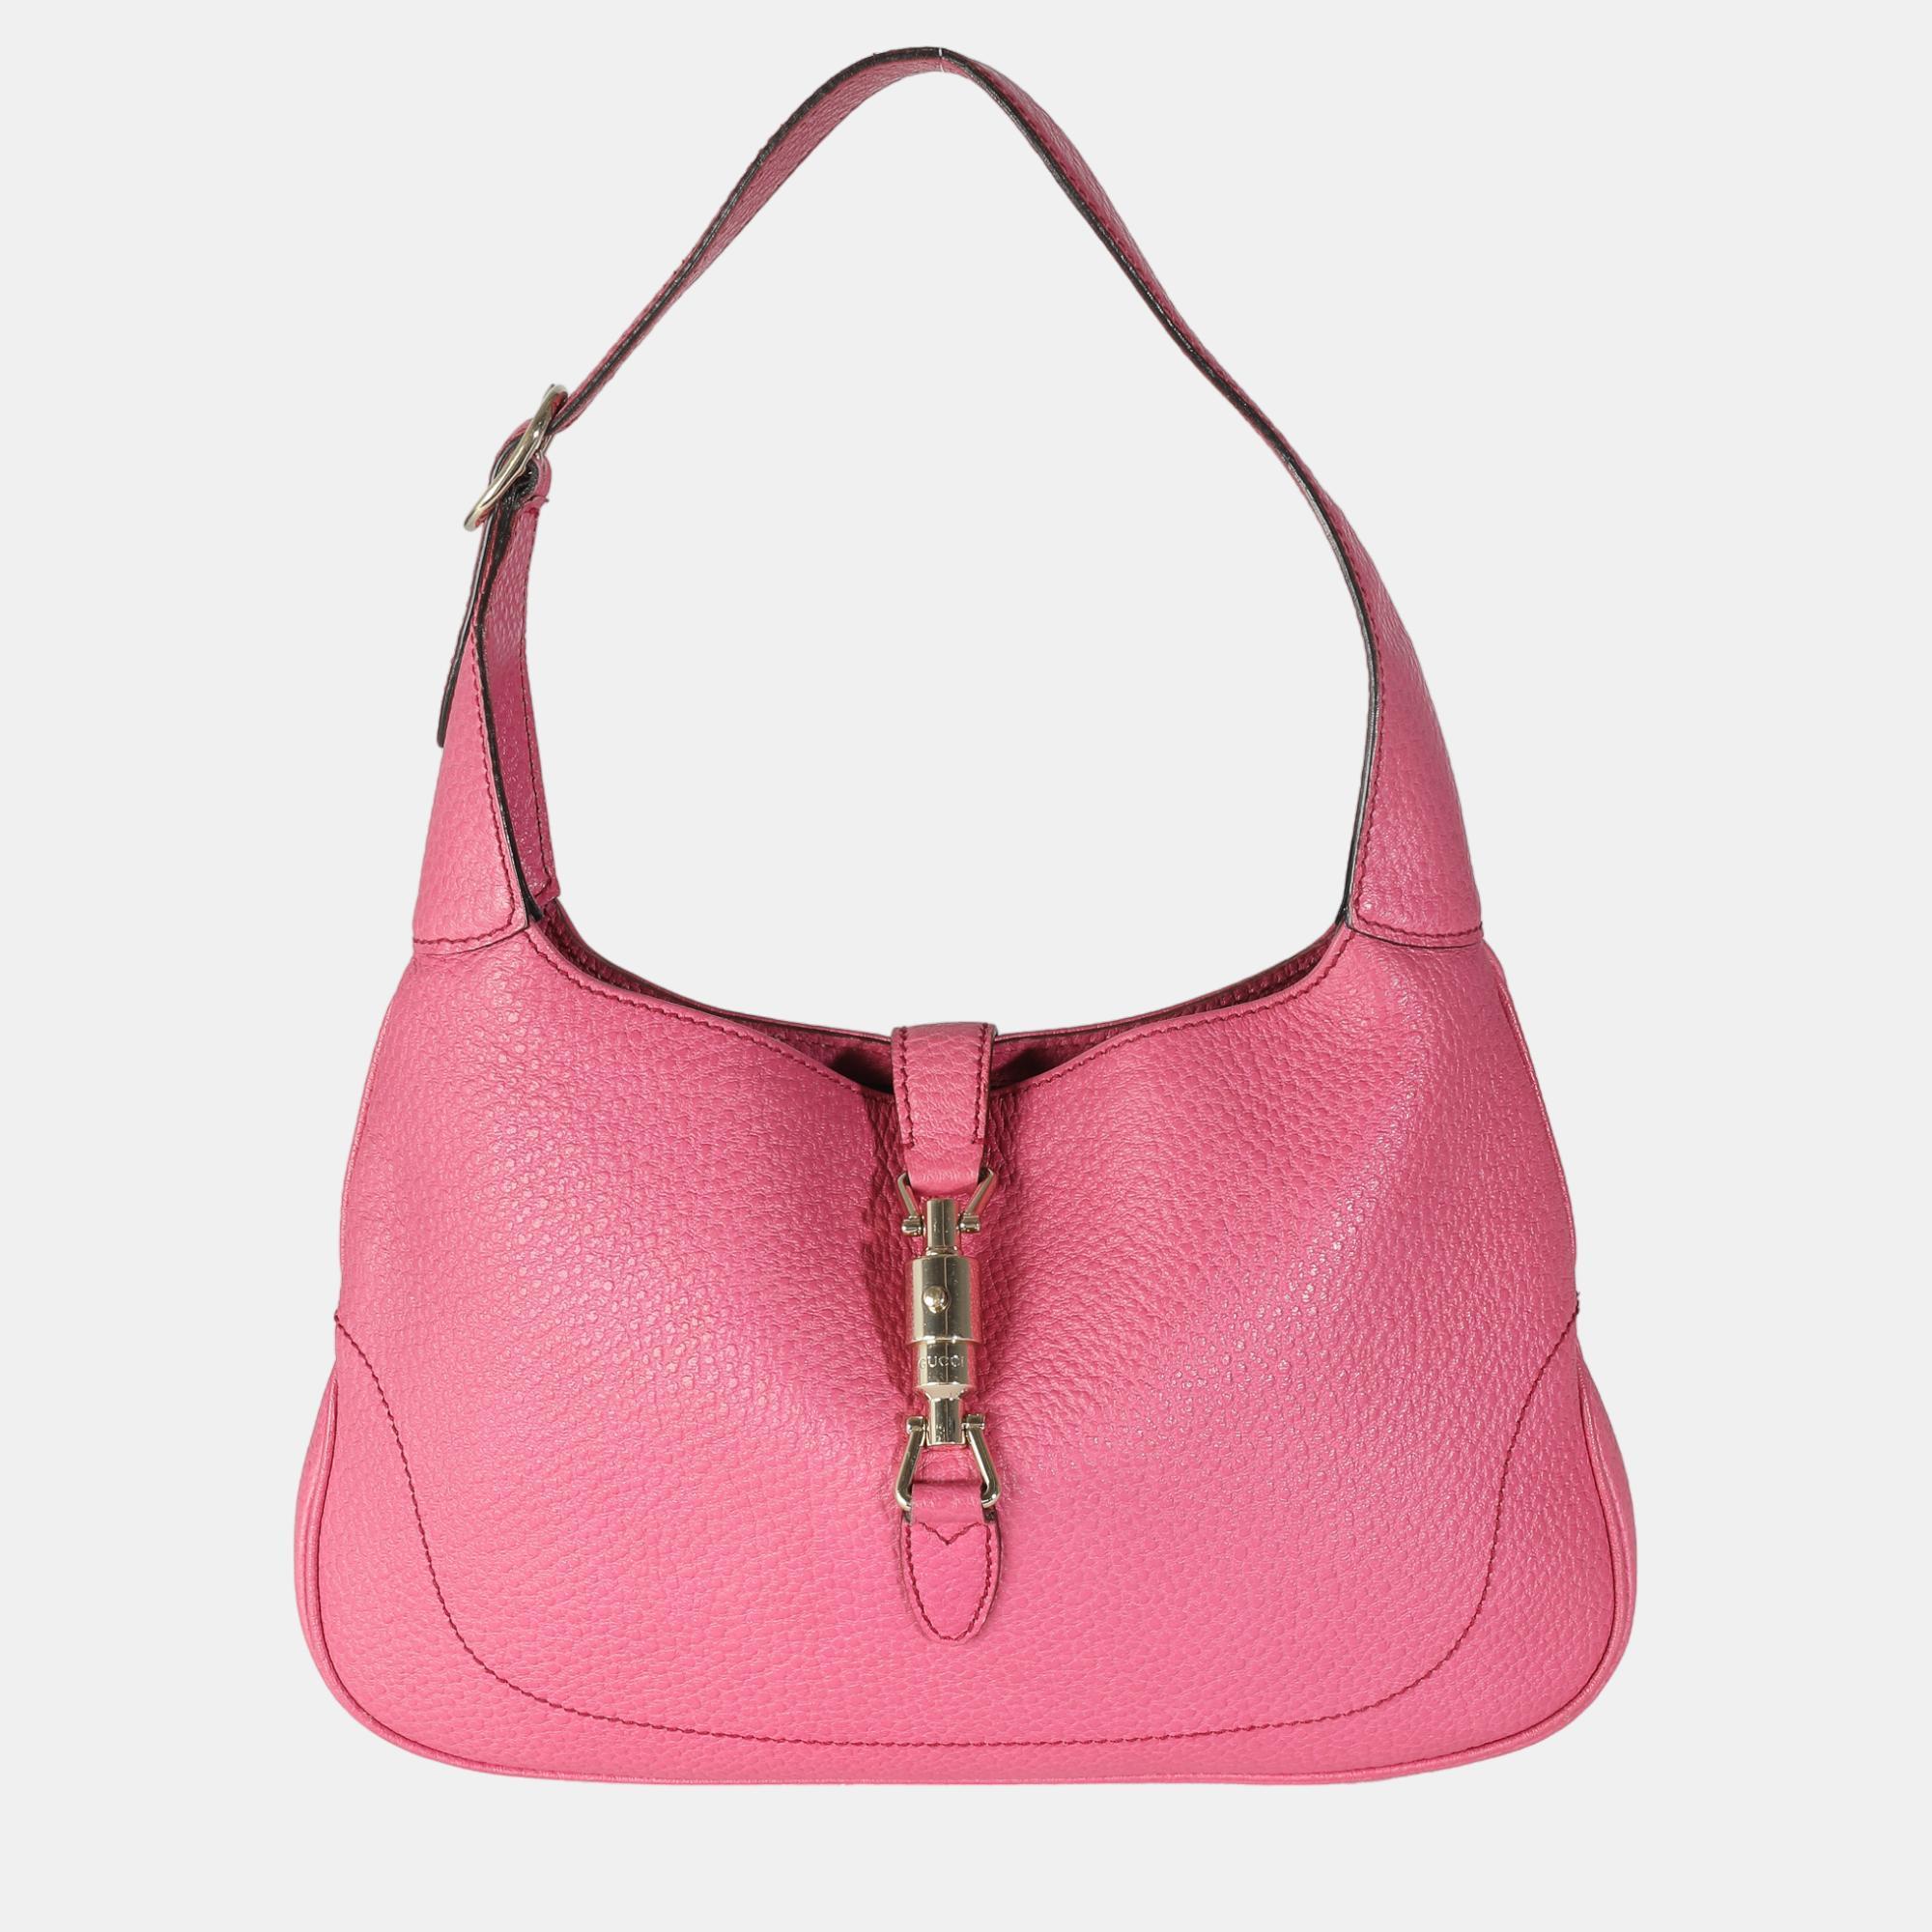 Gucci pink pebbled leather medium 1961 jackie hobo bag